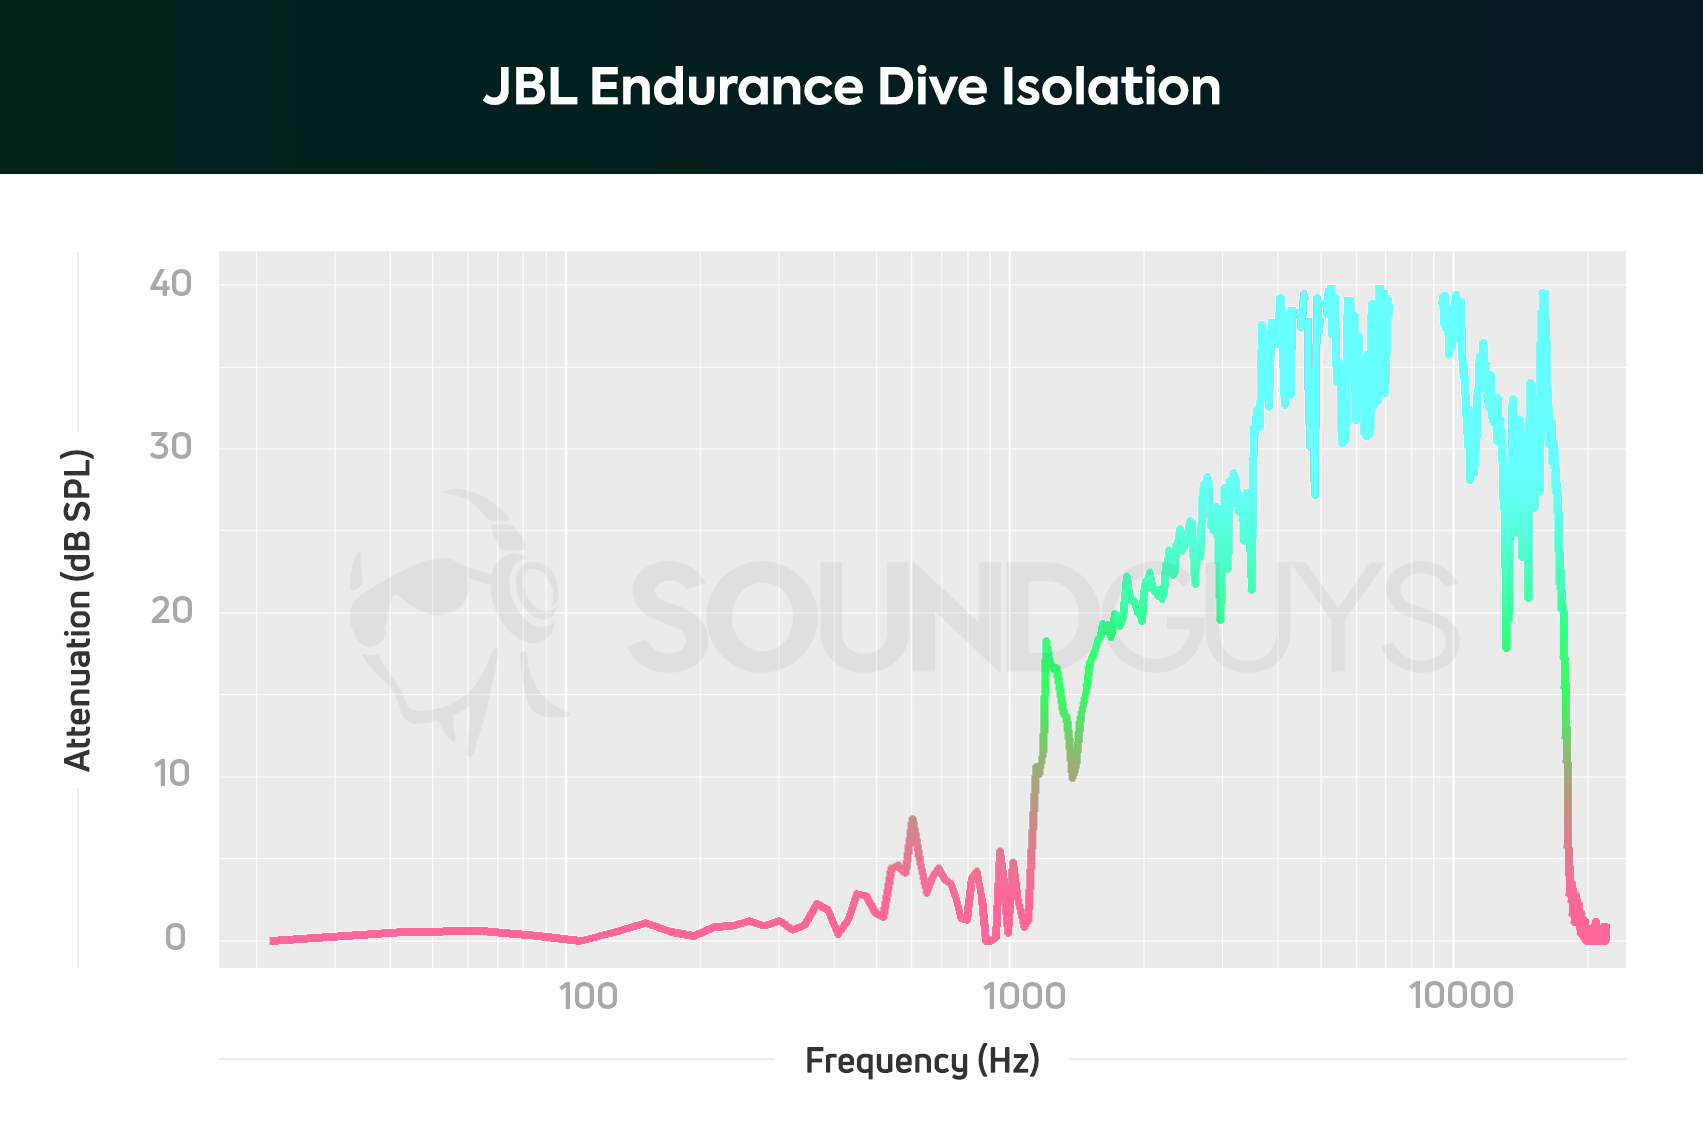 The JBL Endurance Dive isolation chart.